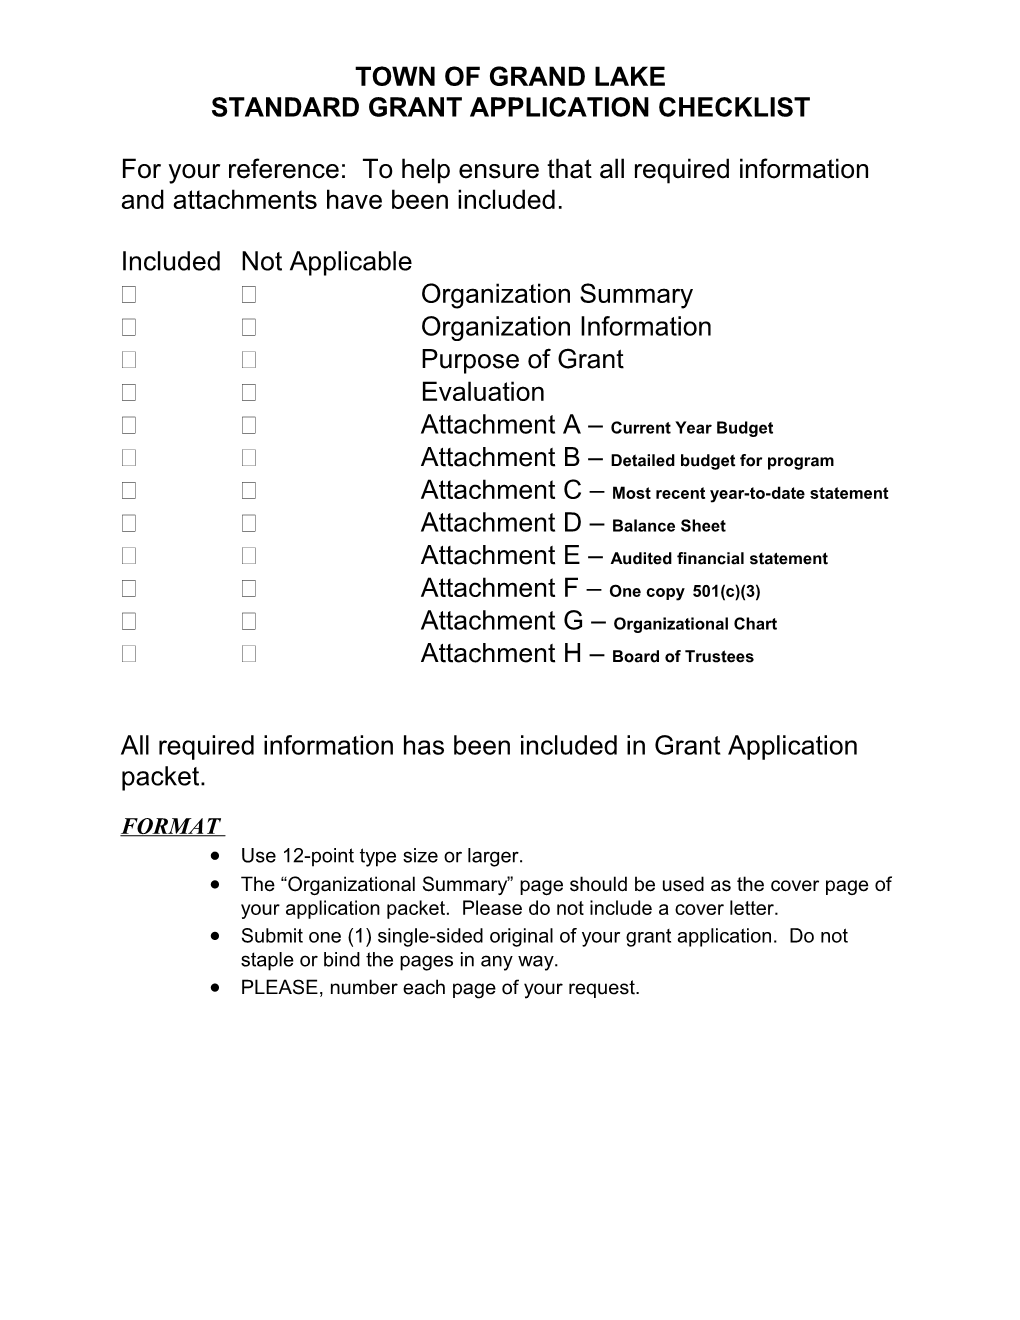 Standard Grant Application Checklist